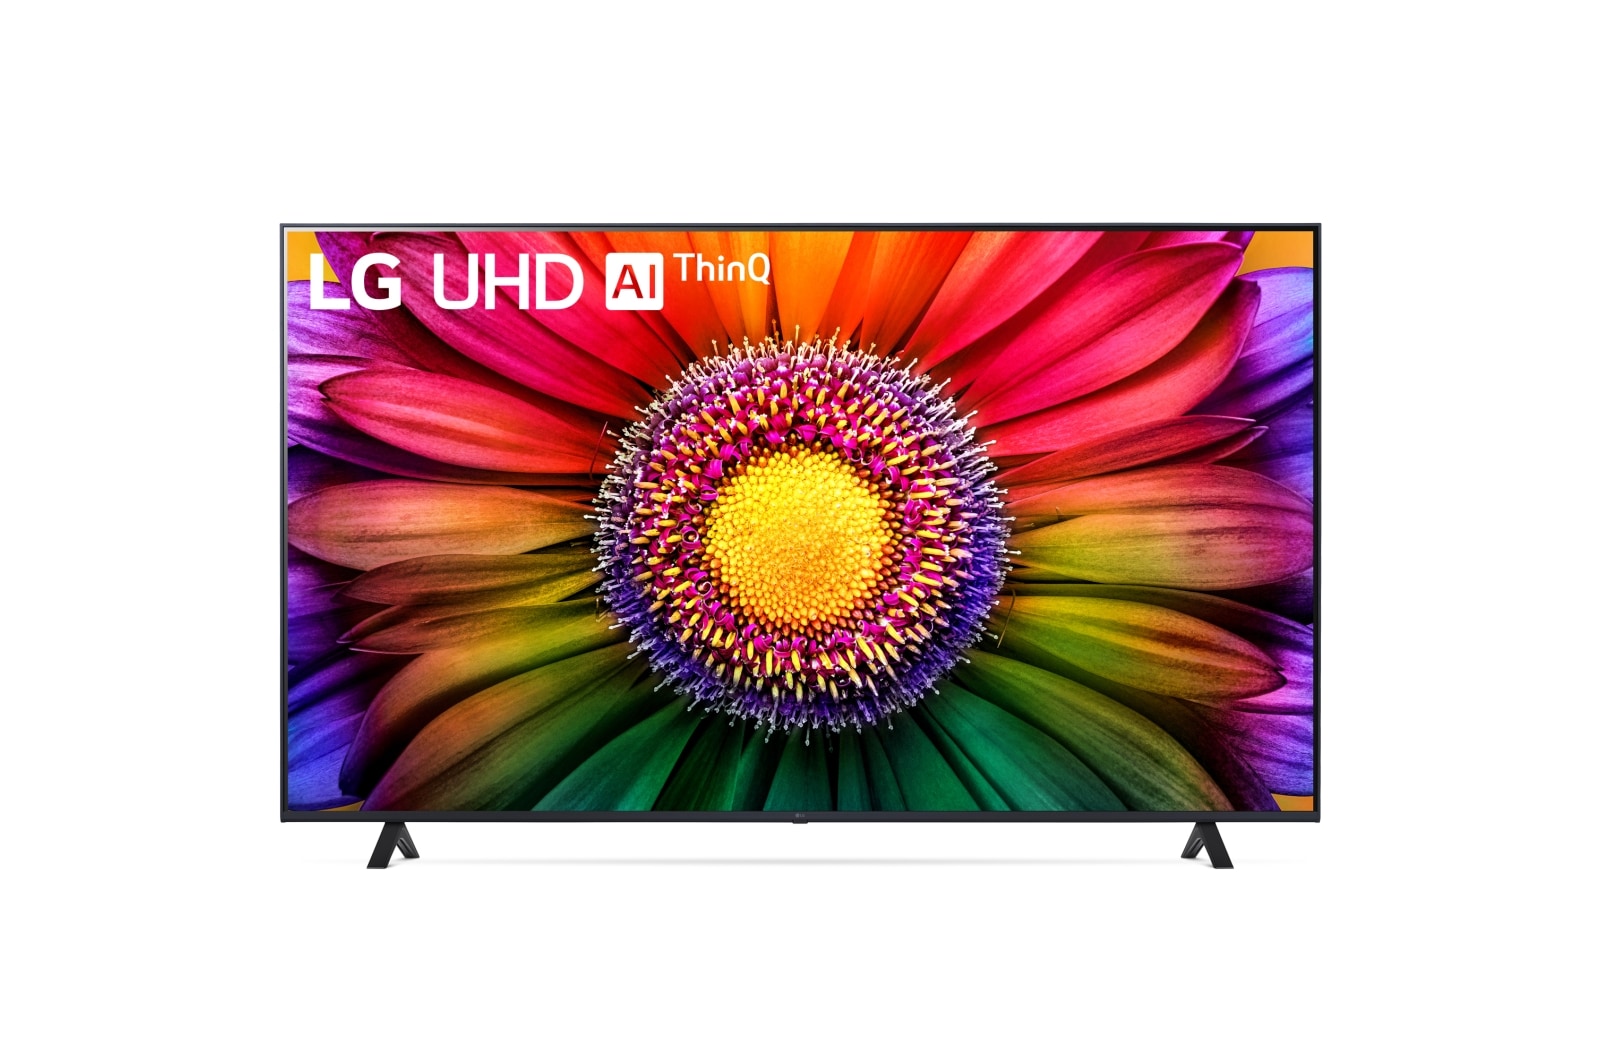 LG Pantalla LG UHD AI ThinQ 75 pulgadas 4K SMART TV  75UR8750PSA, 75UR8750PSA